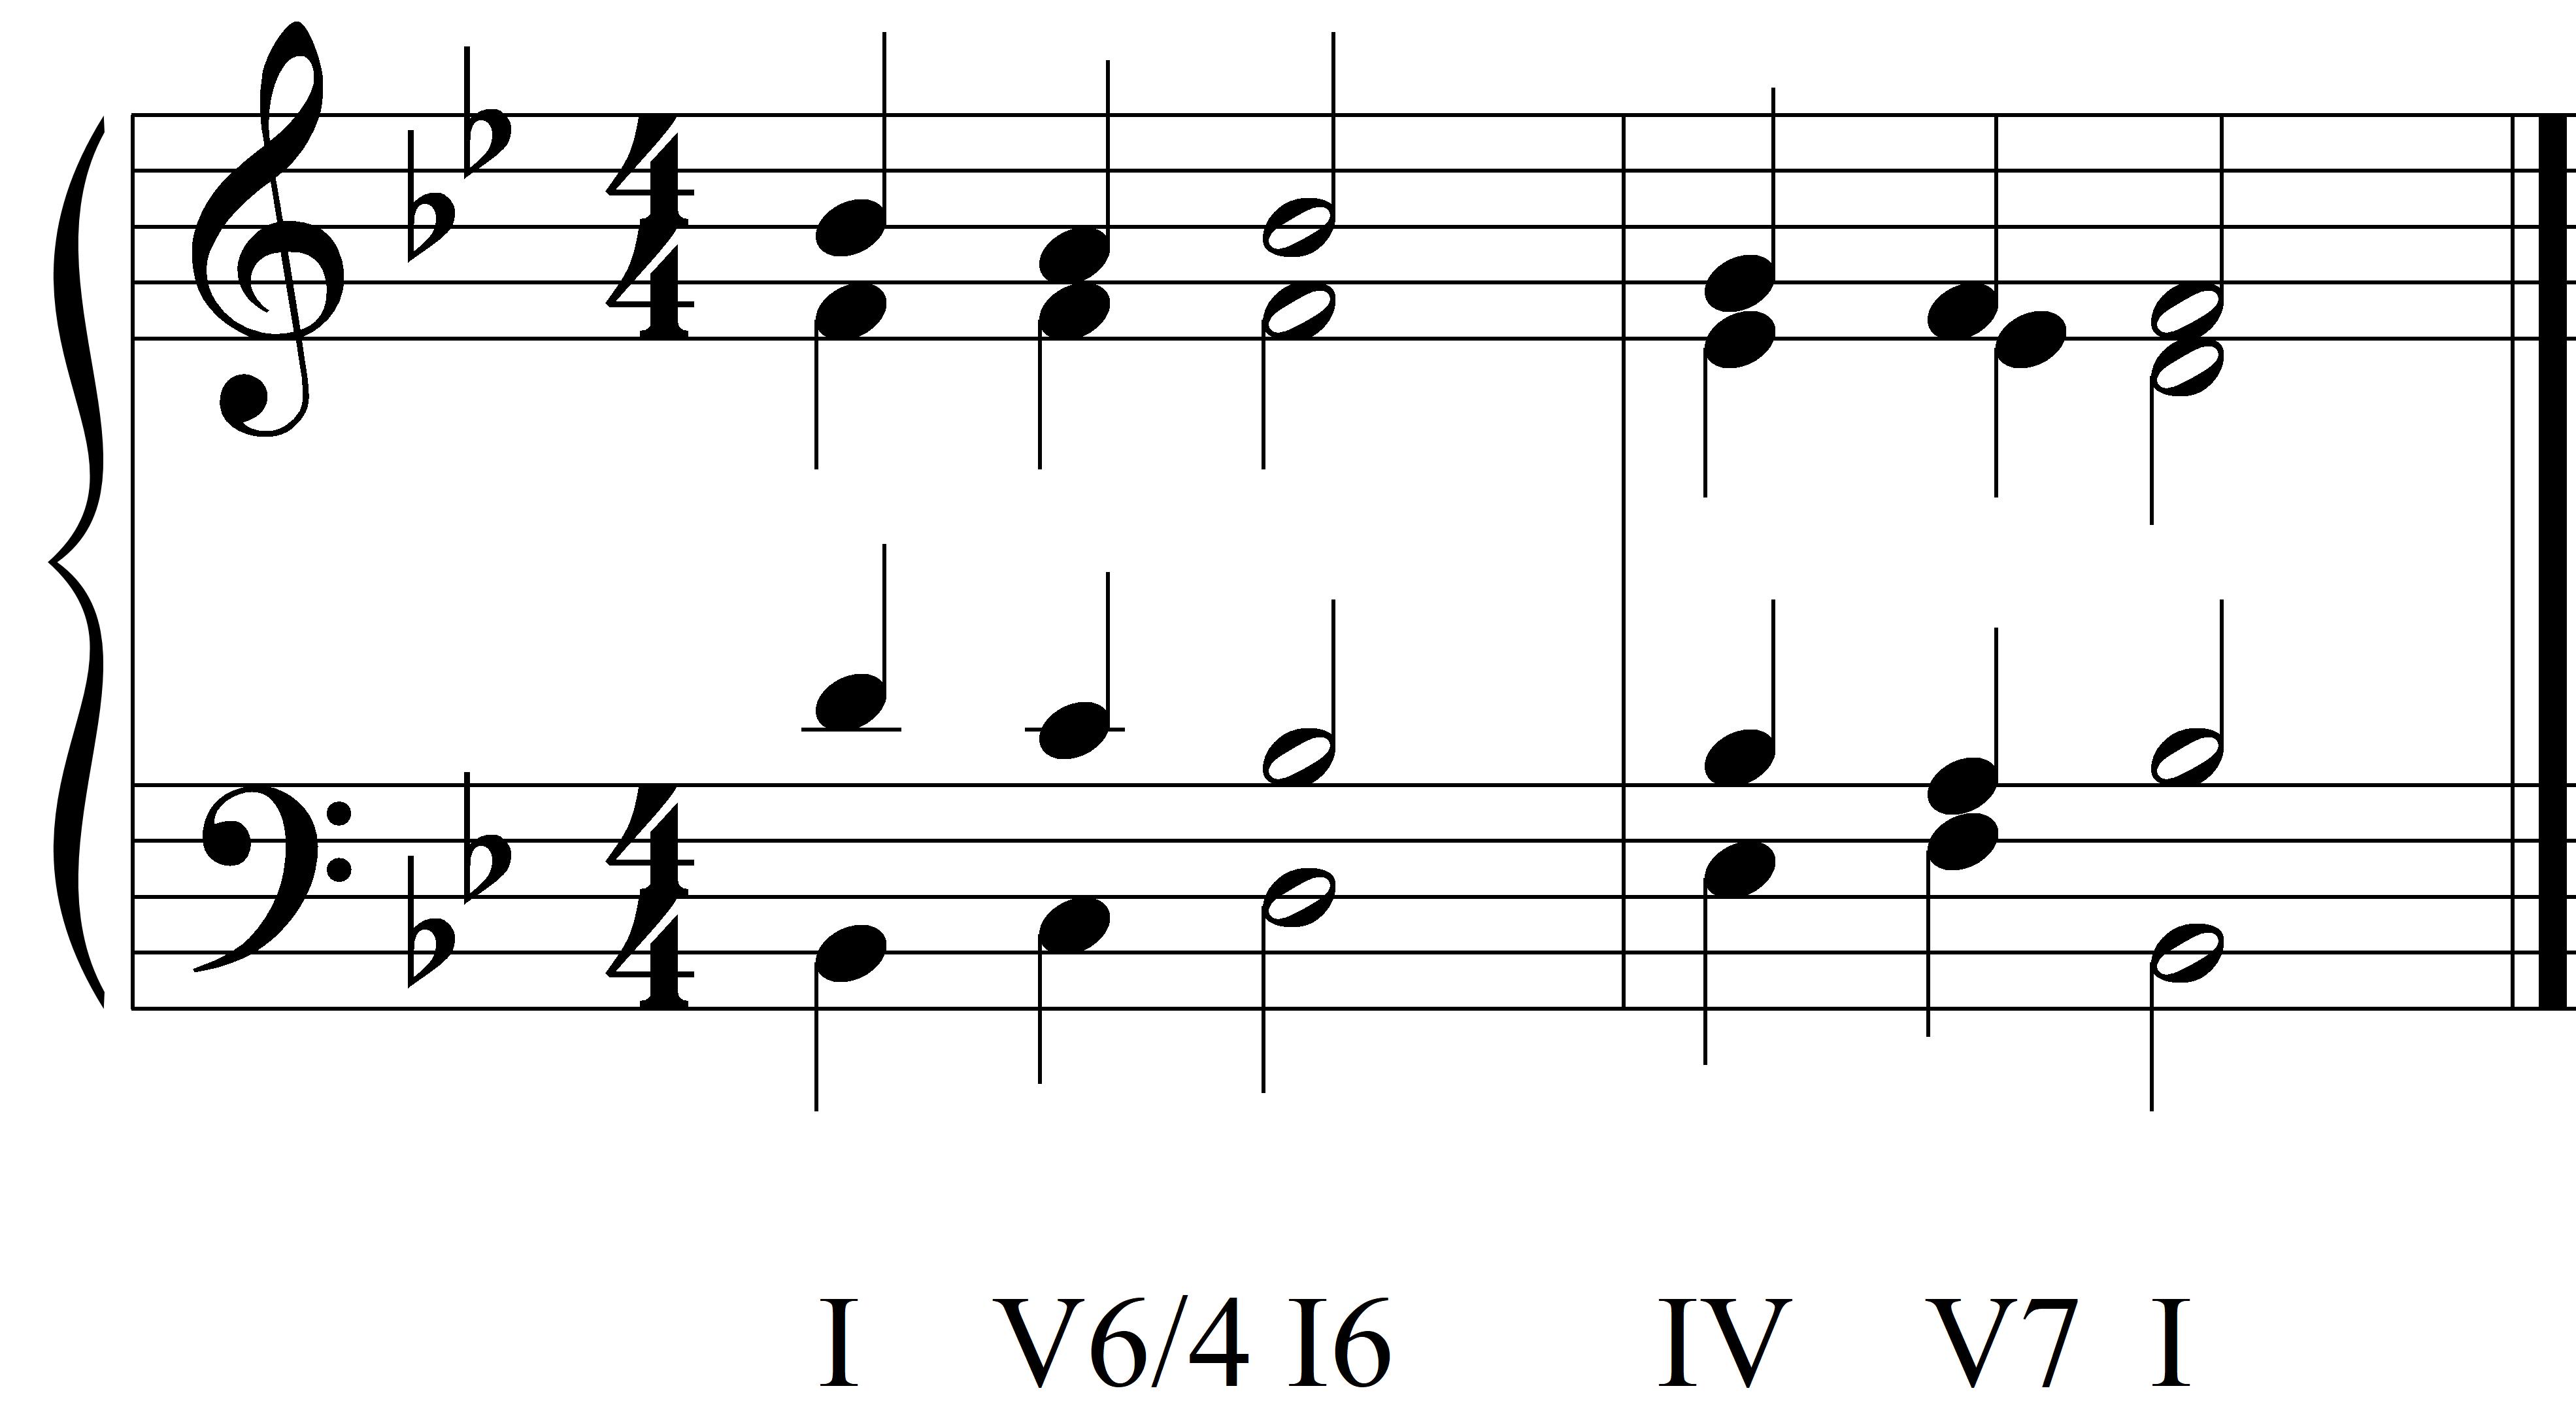 Harmonic Dictation 6 Chords